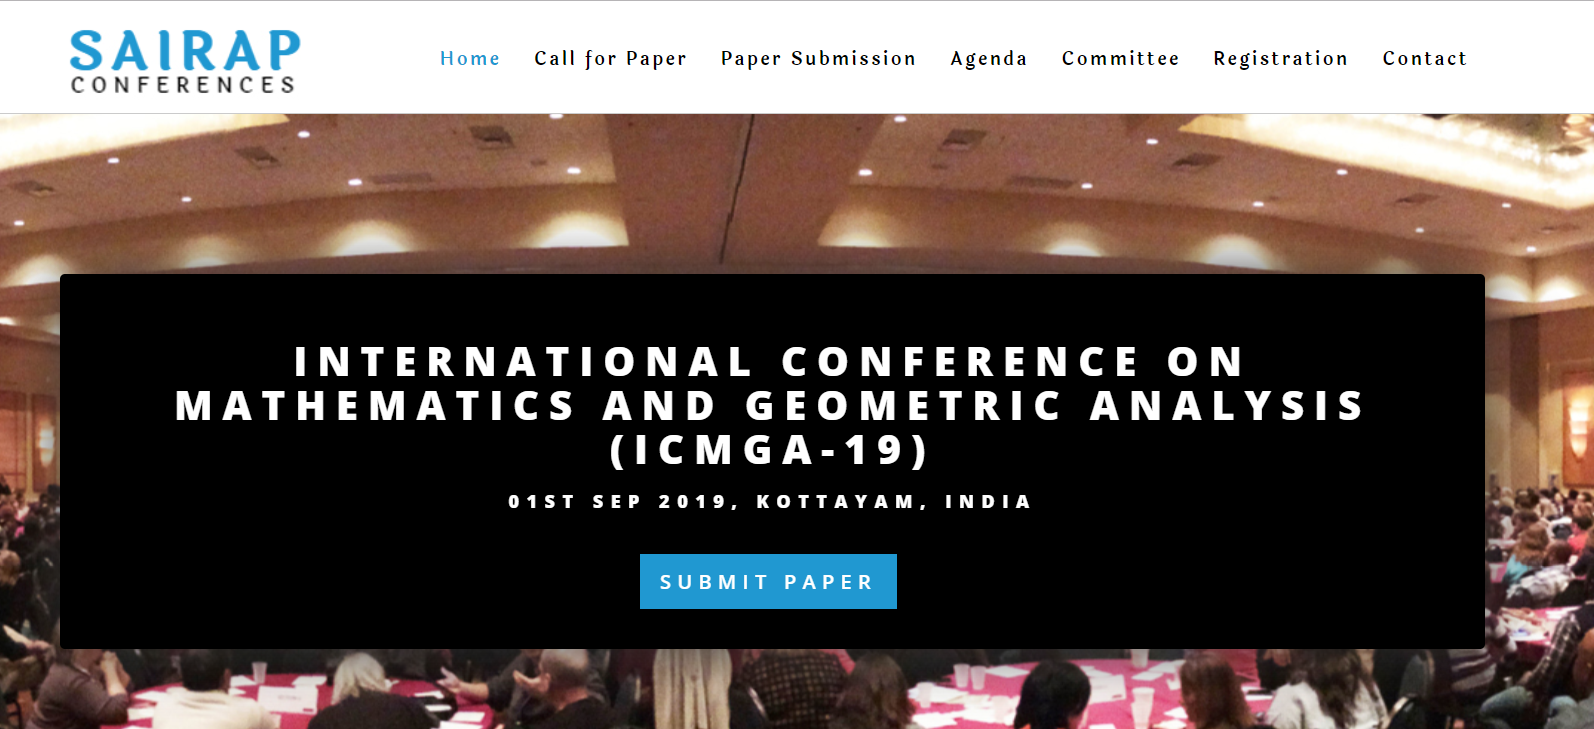 INTERNATIONAL CONFERENCE ON MATHEMATICS AND GEOMETRIC ANALYSIS (ICMGA-19), Kottayam, Kerala, India